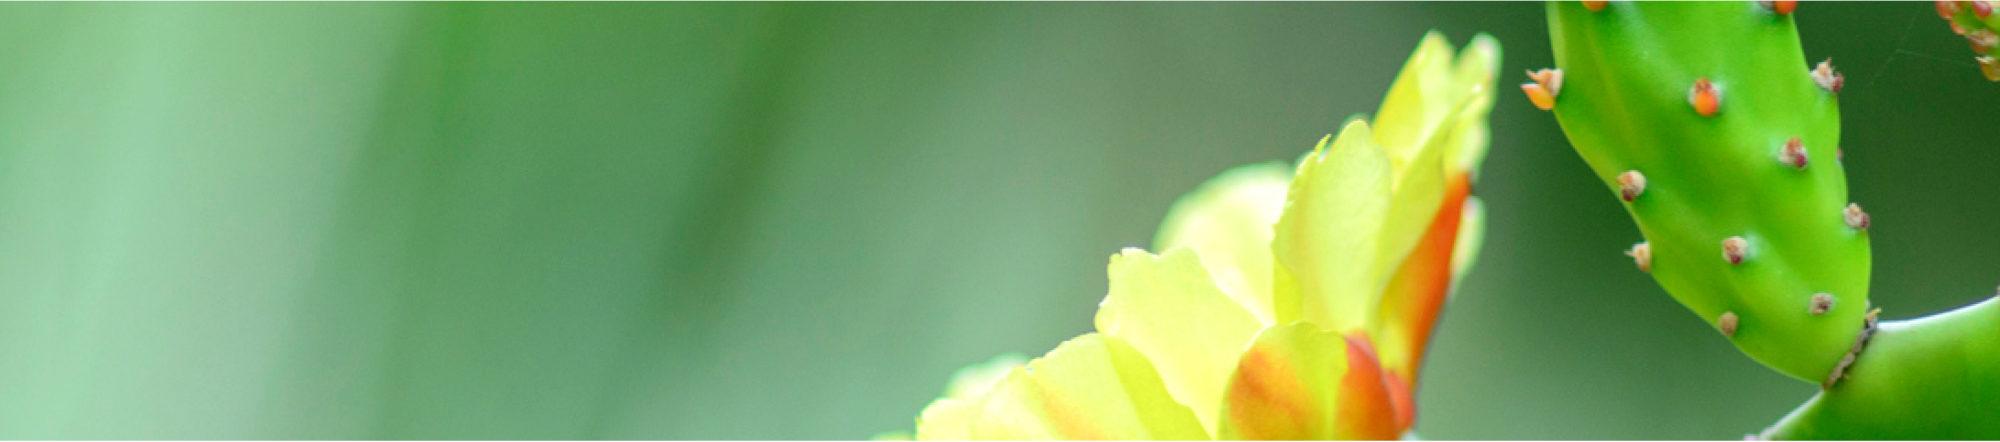 close up of cactus flower